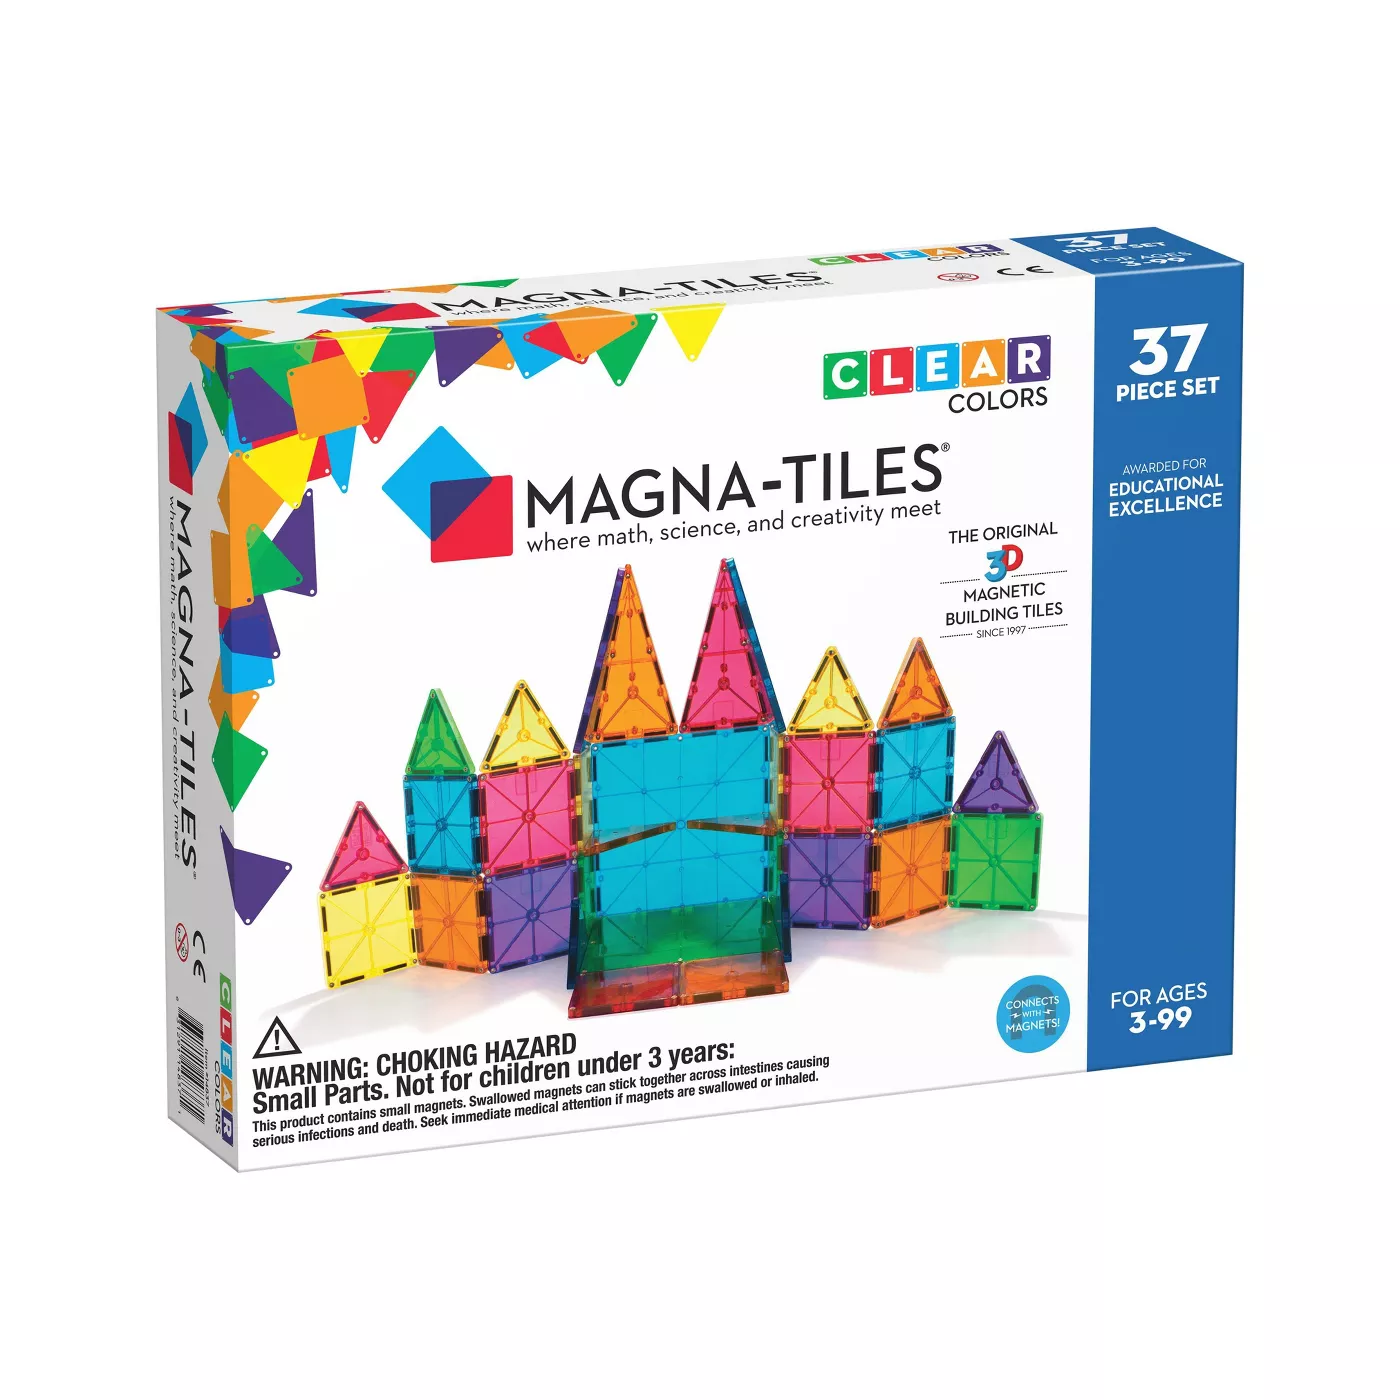 MAGNA-TILES Clear Colors 37pc Set - image 1 of 9